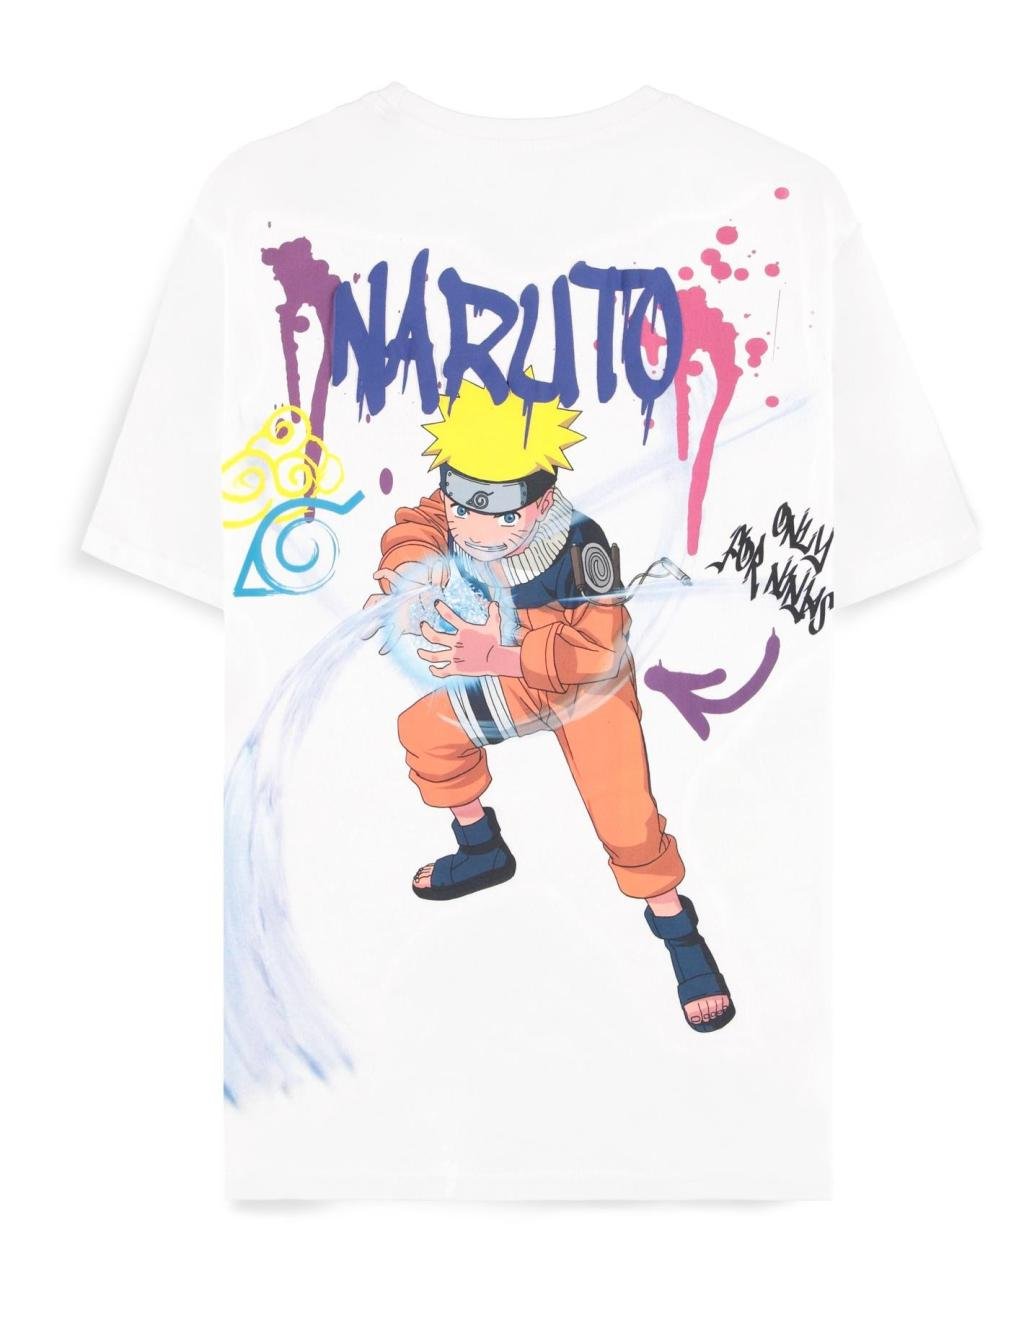 NARUTO - Power Ball - Men's T-shirt (XS)